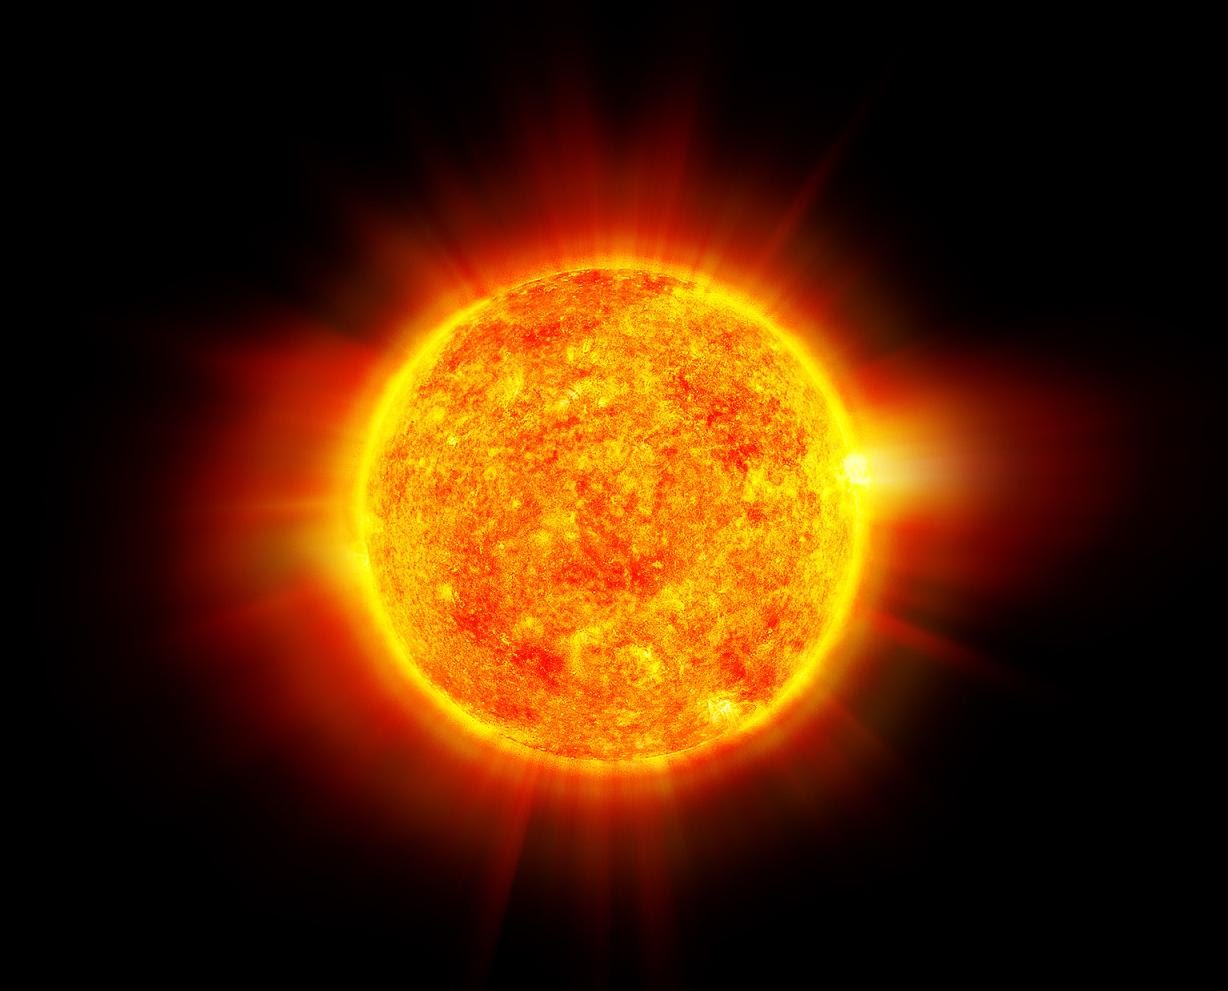 Georgia, NASA launch joint project on Sun studies